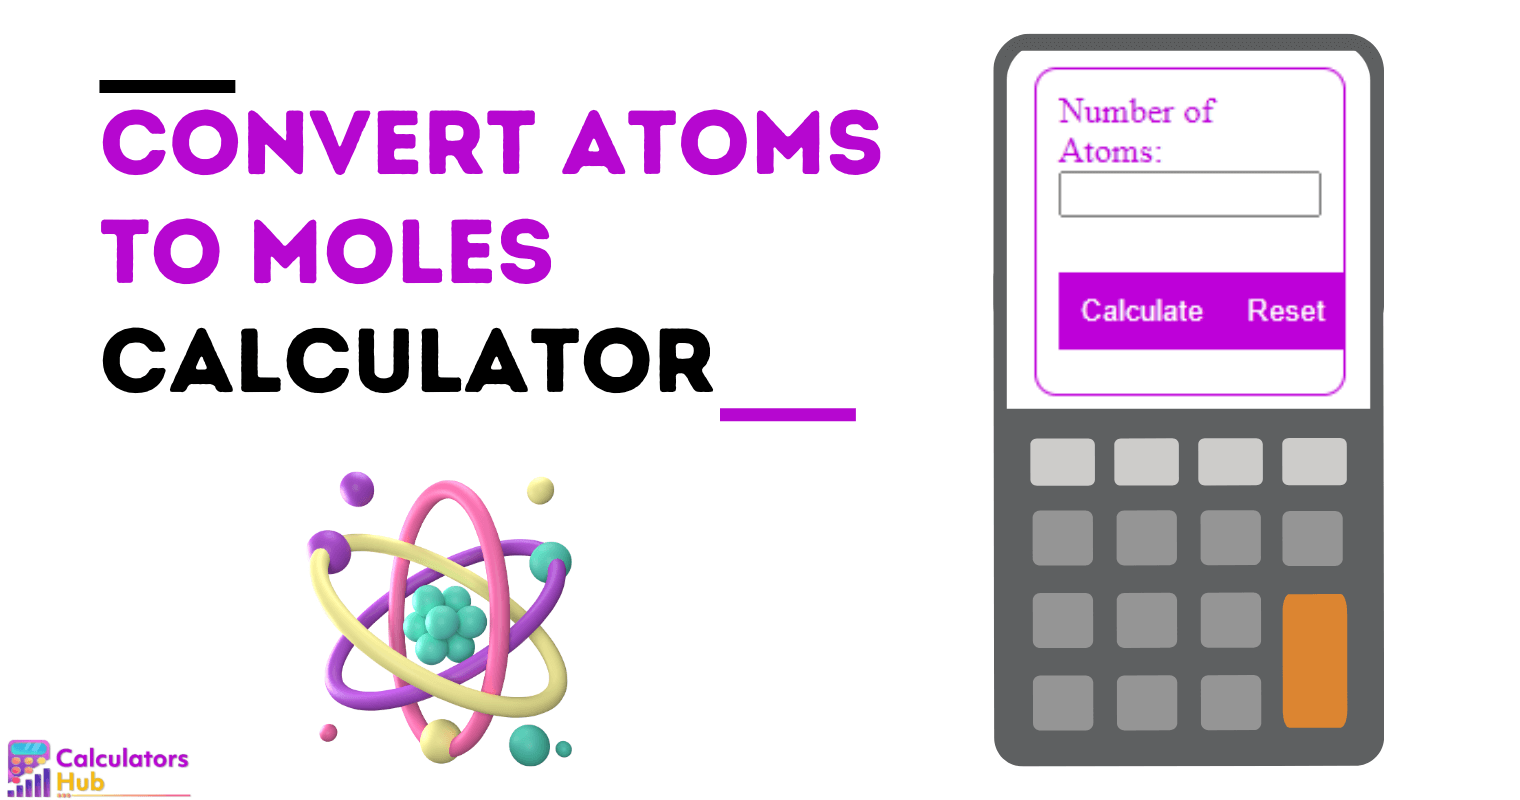 Convert Atoms to Moles Calculator